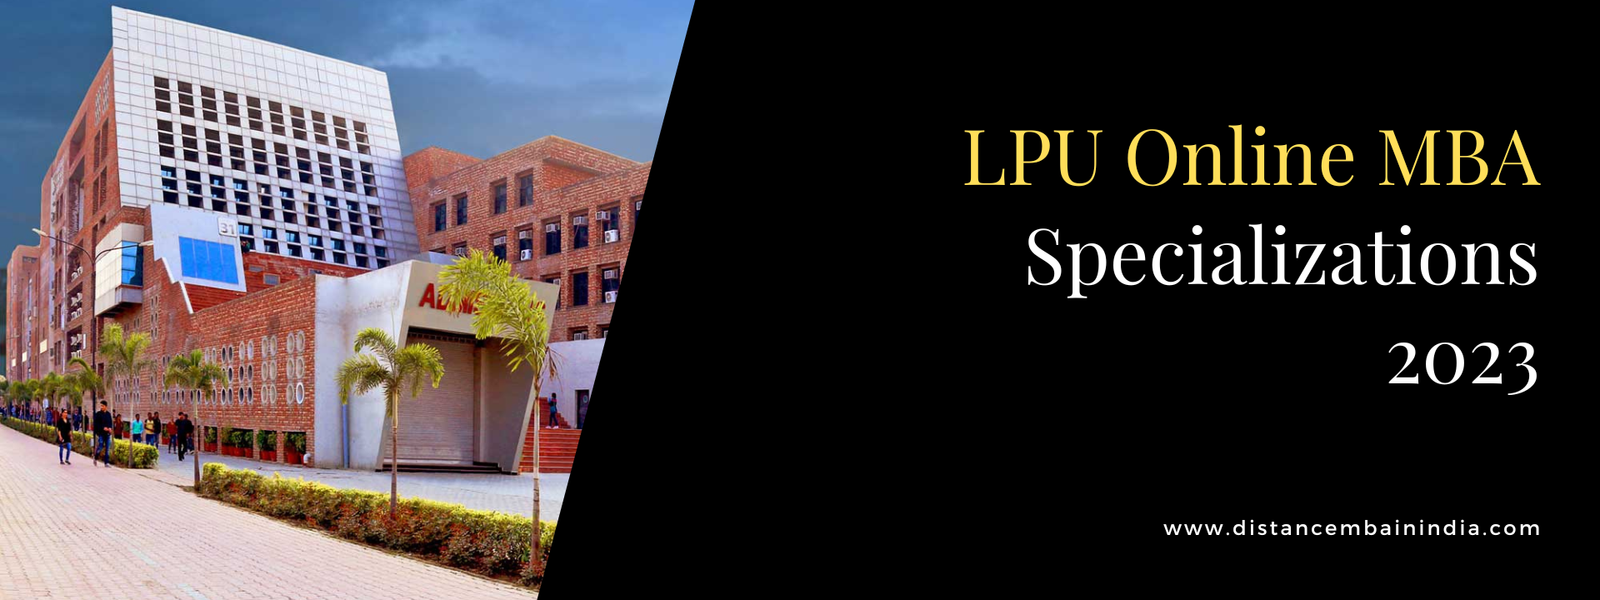 LPU Online MBA Specializations